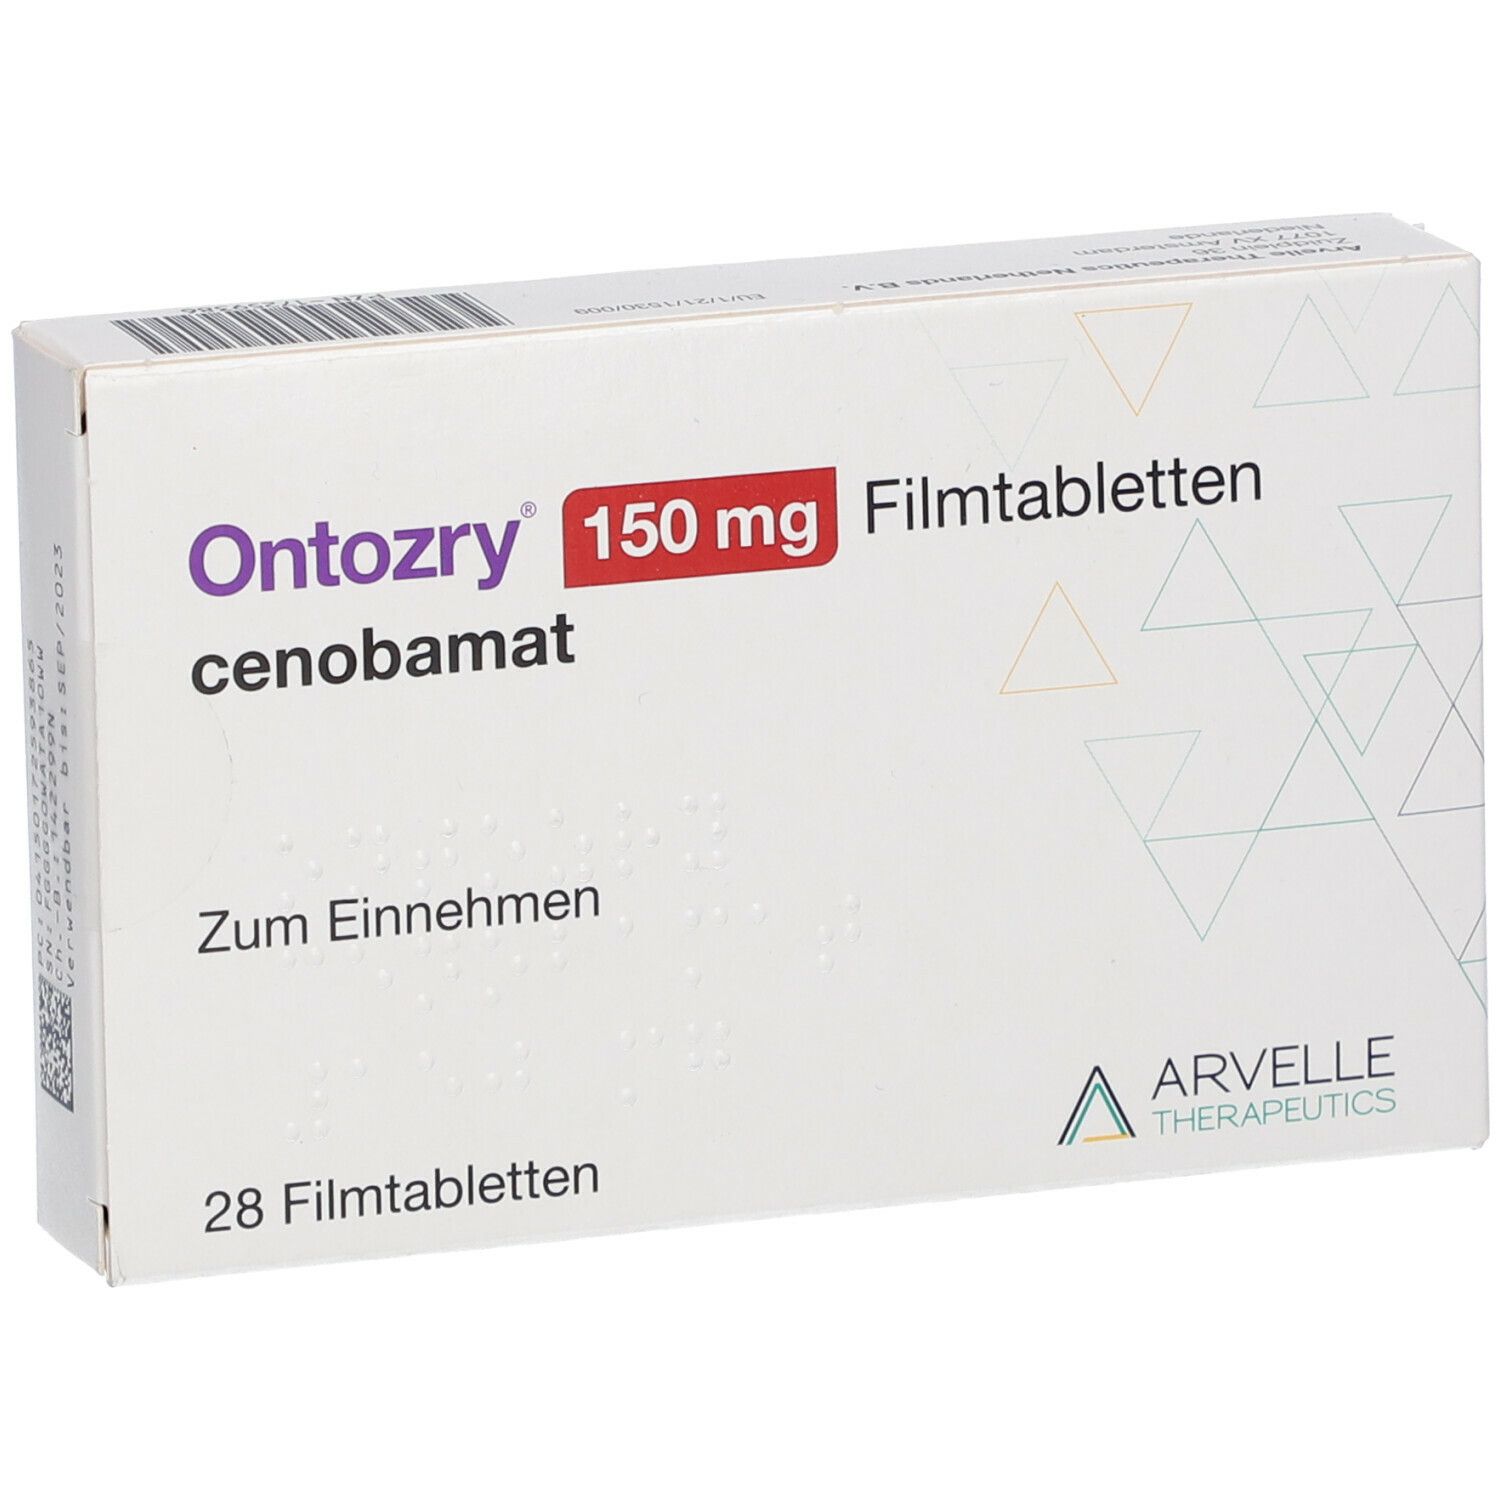 Ontozry 150 mg